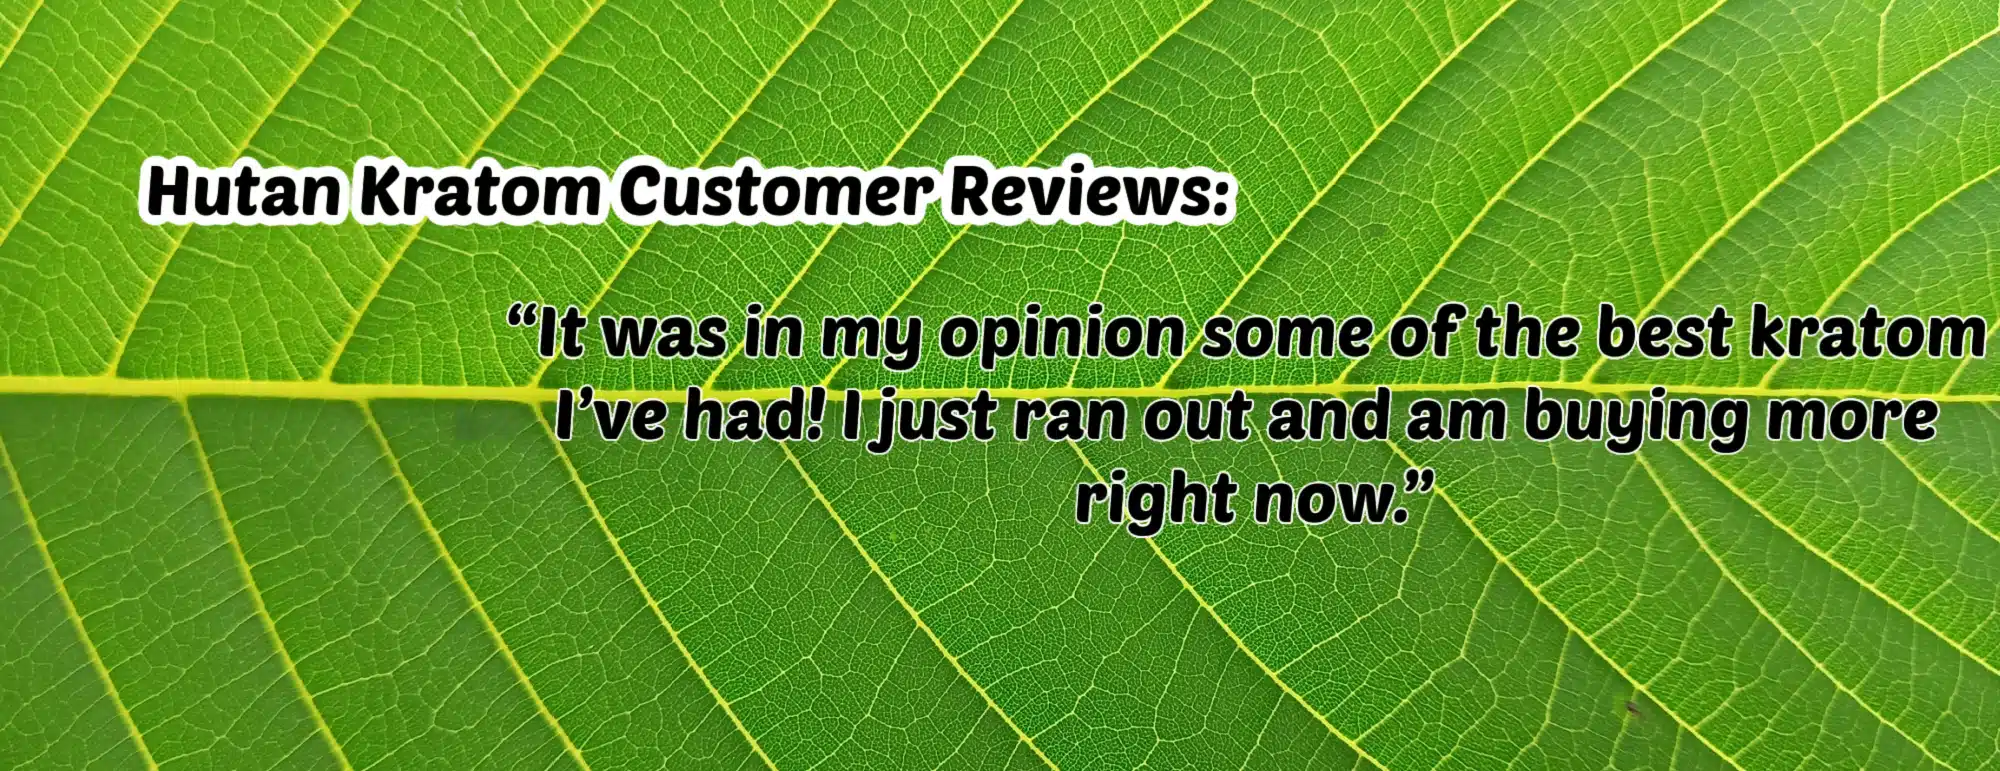 Hutan kratom customer reviews